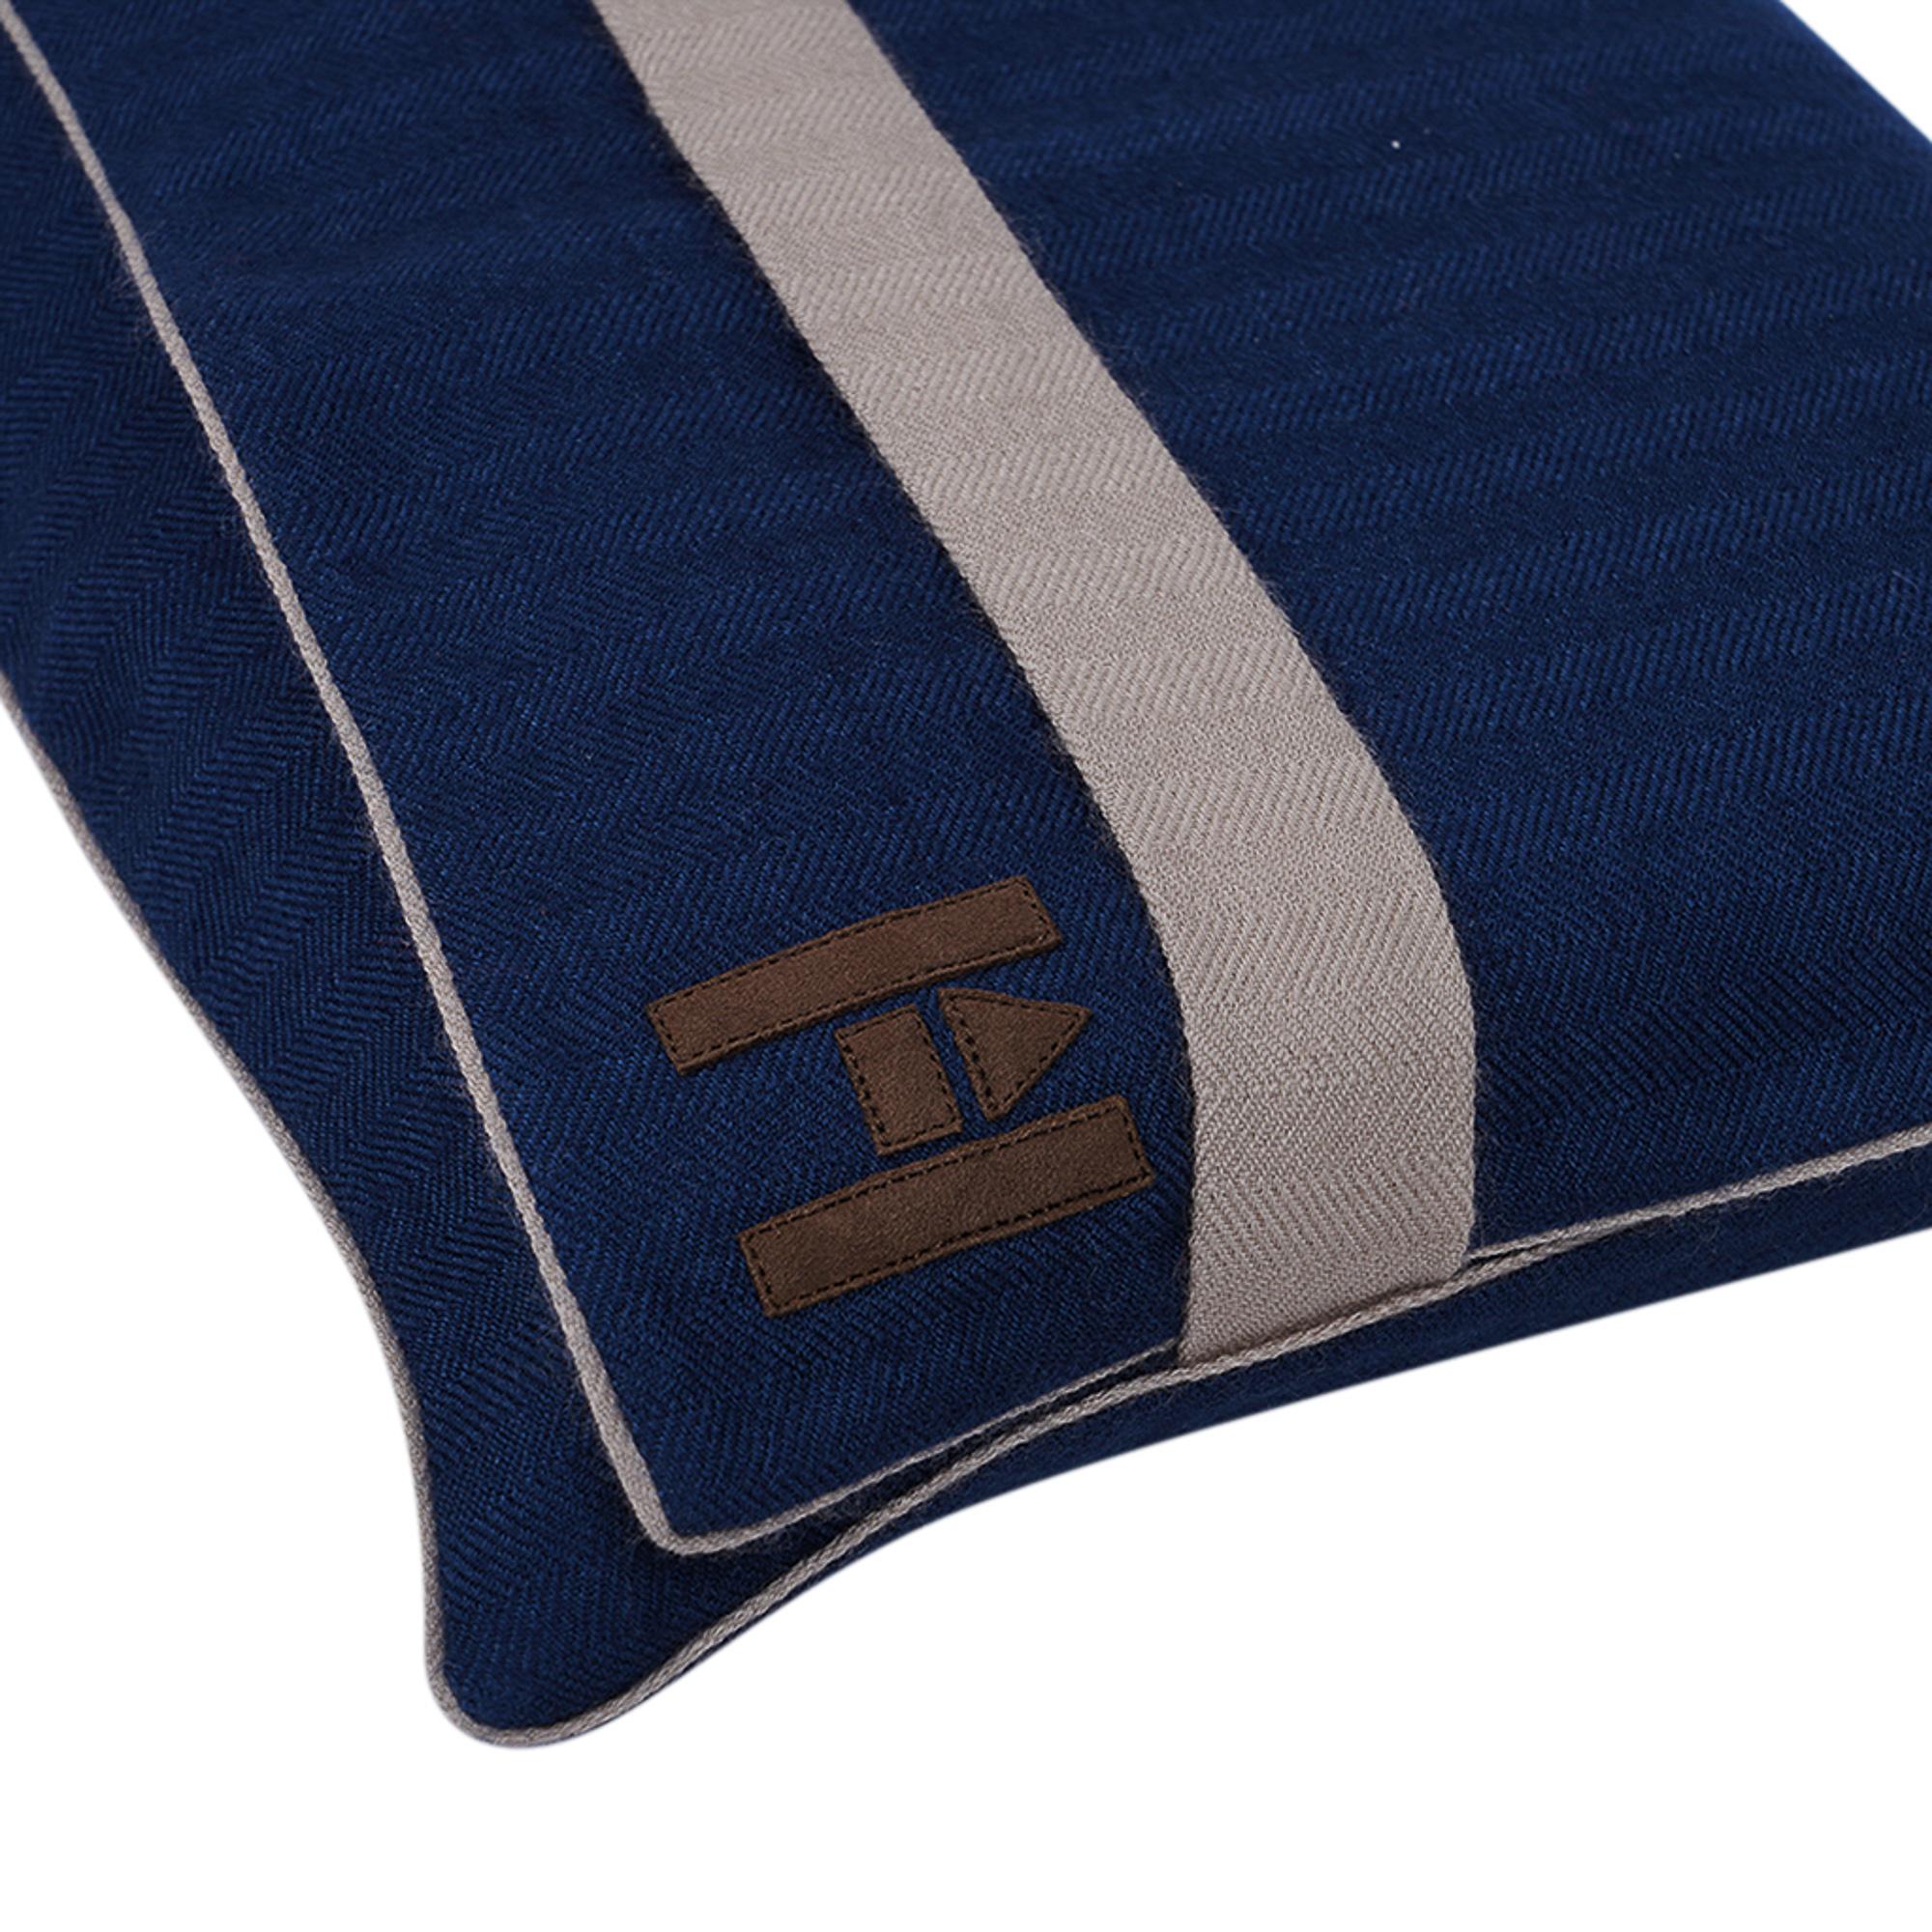 Hermes Traveler with Case Blanket Blue / Cream Cashmere For Sale 2